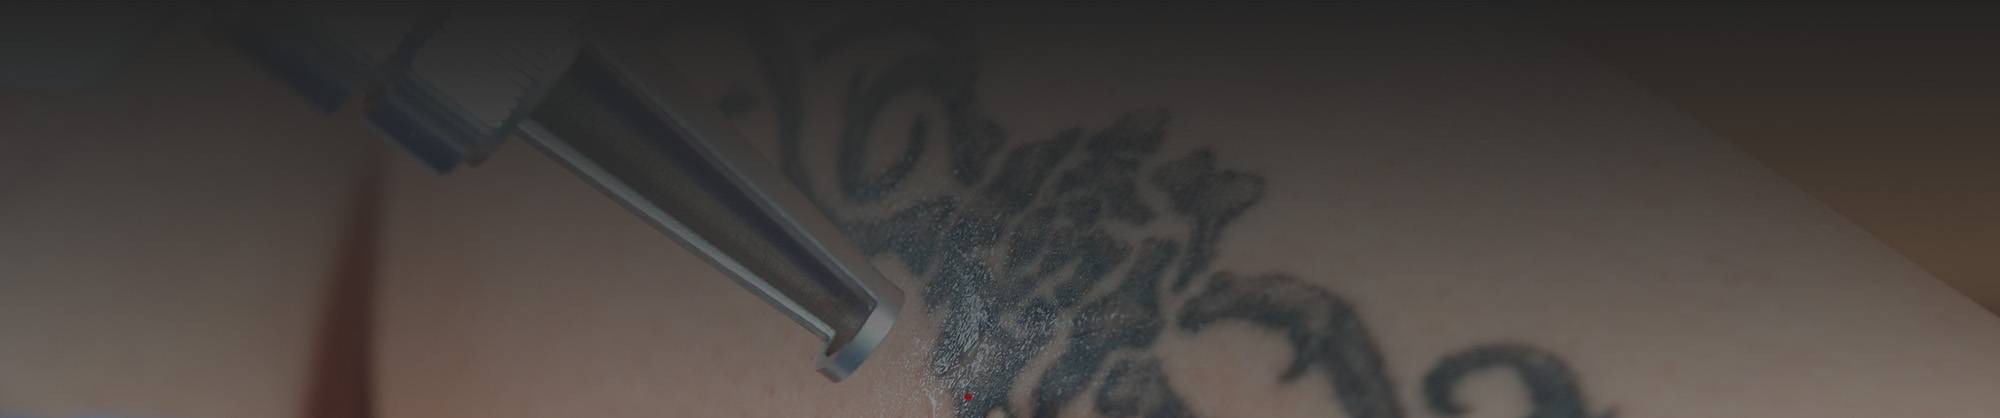 PicoSure Laser tattoo removal near Milwaukee